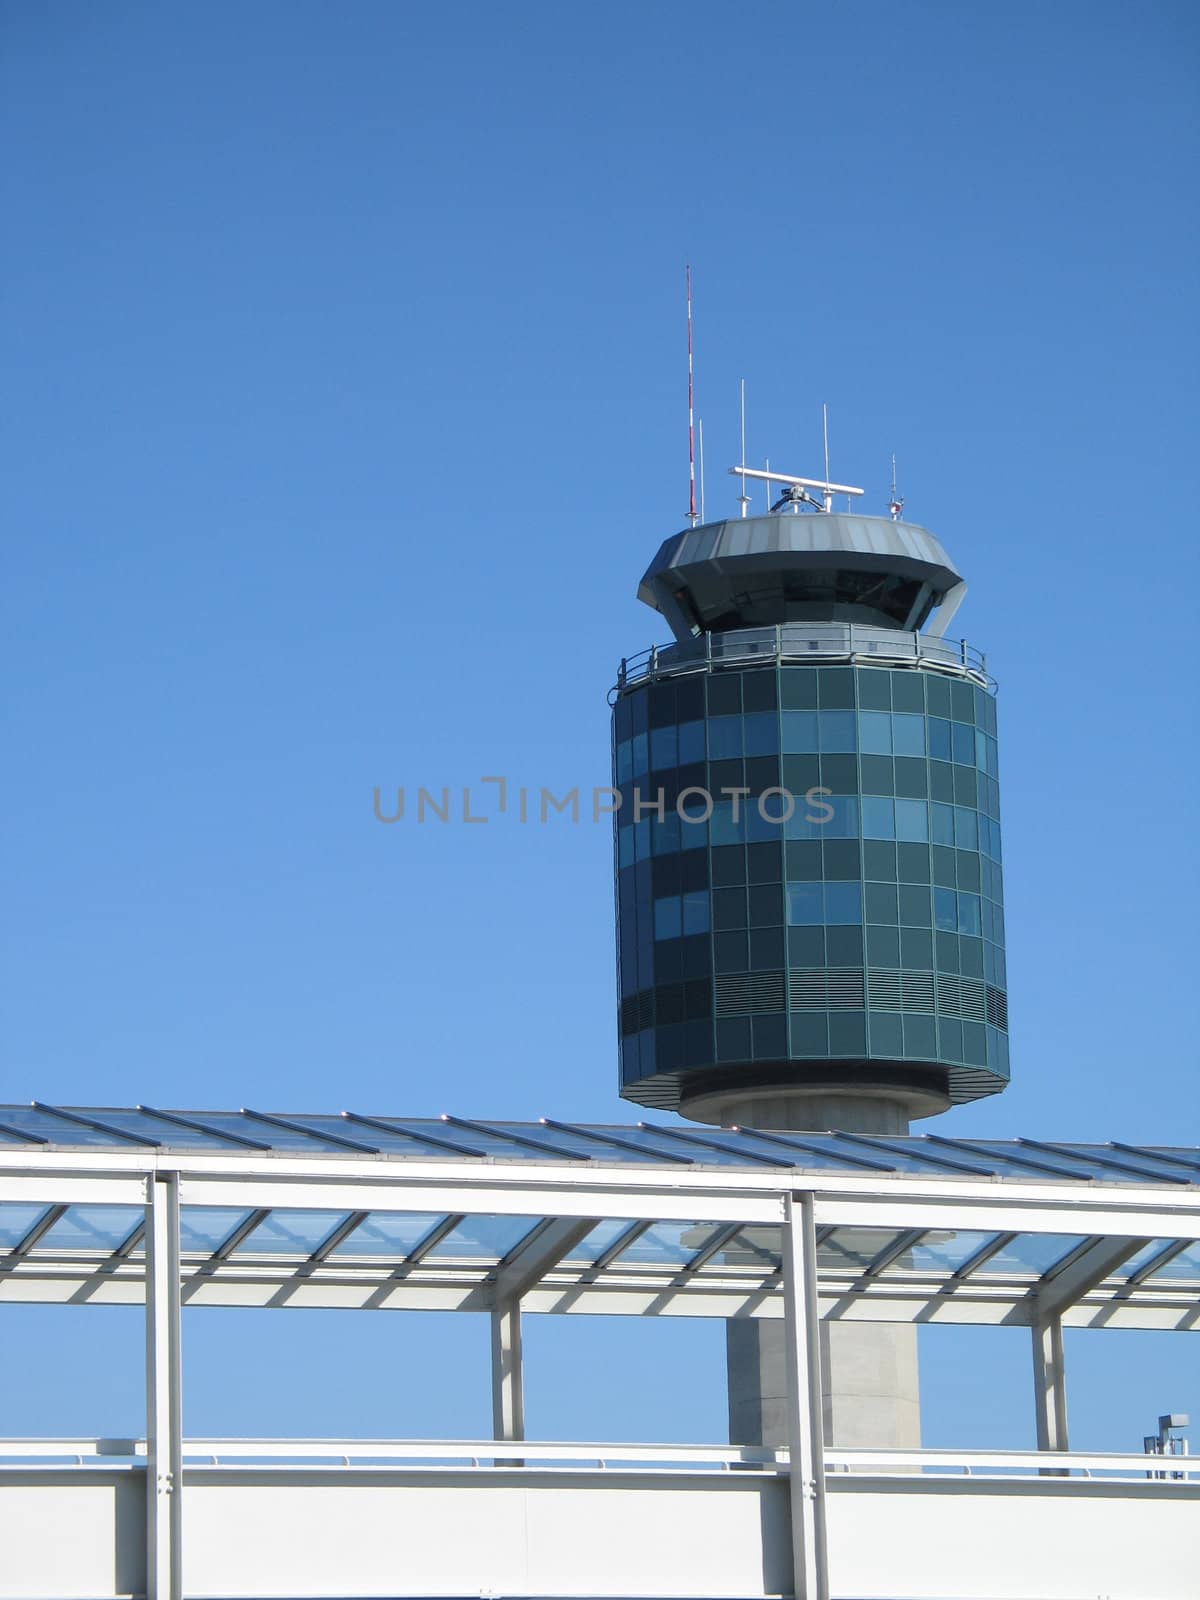 airpot traffic tower